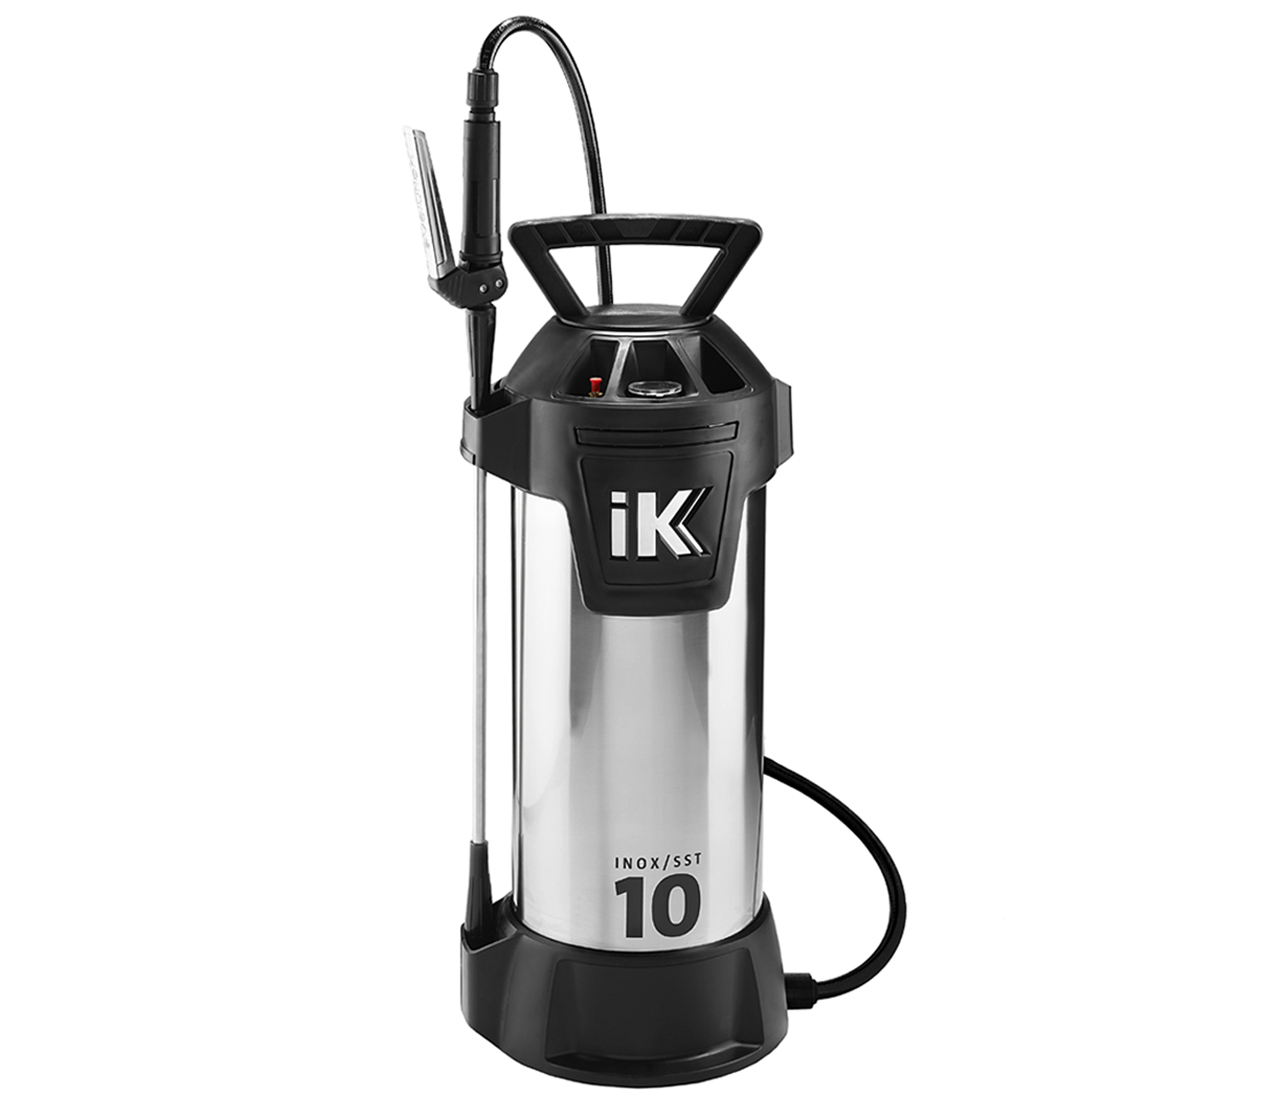 IK 3 Gallon Inox 10 Professional Metal & Stainless Steel Sprayer